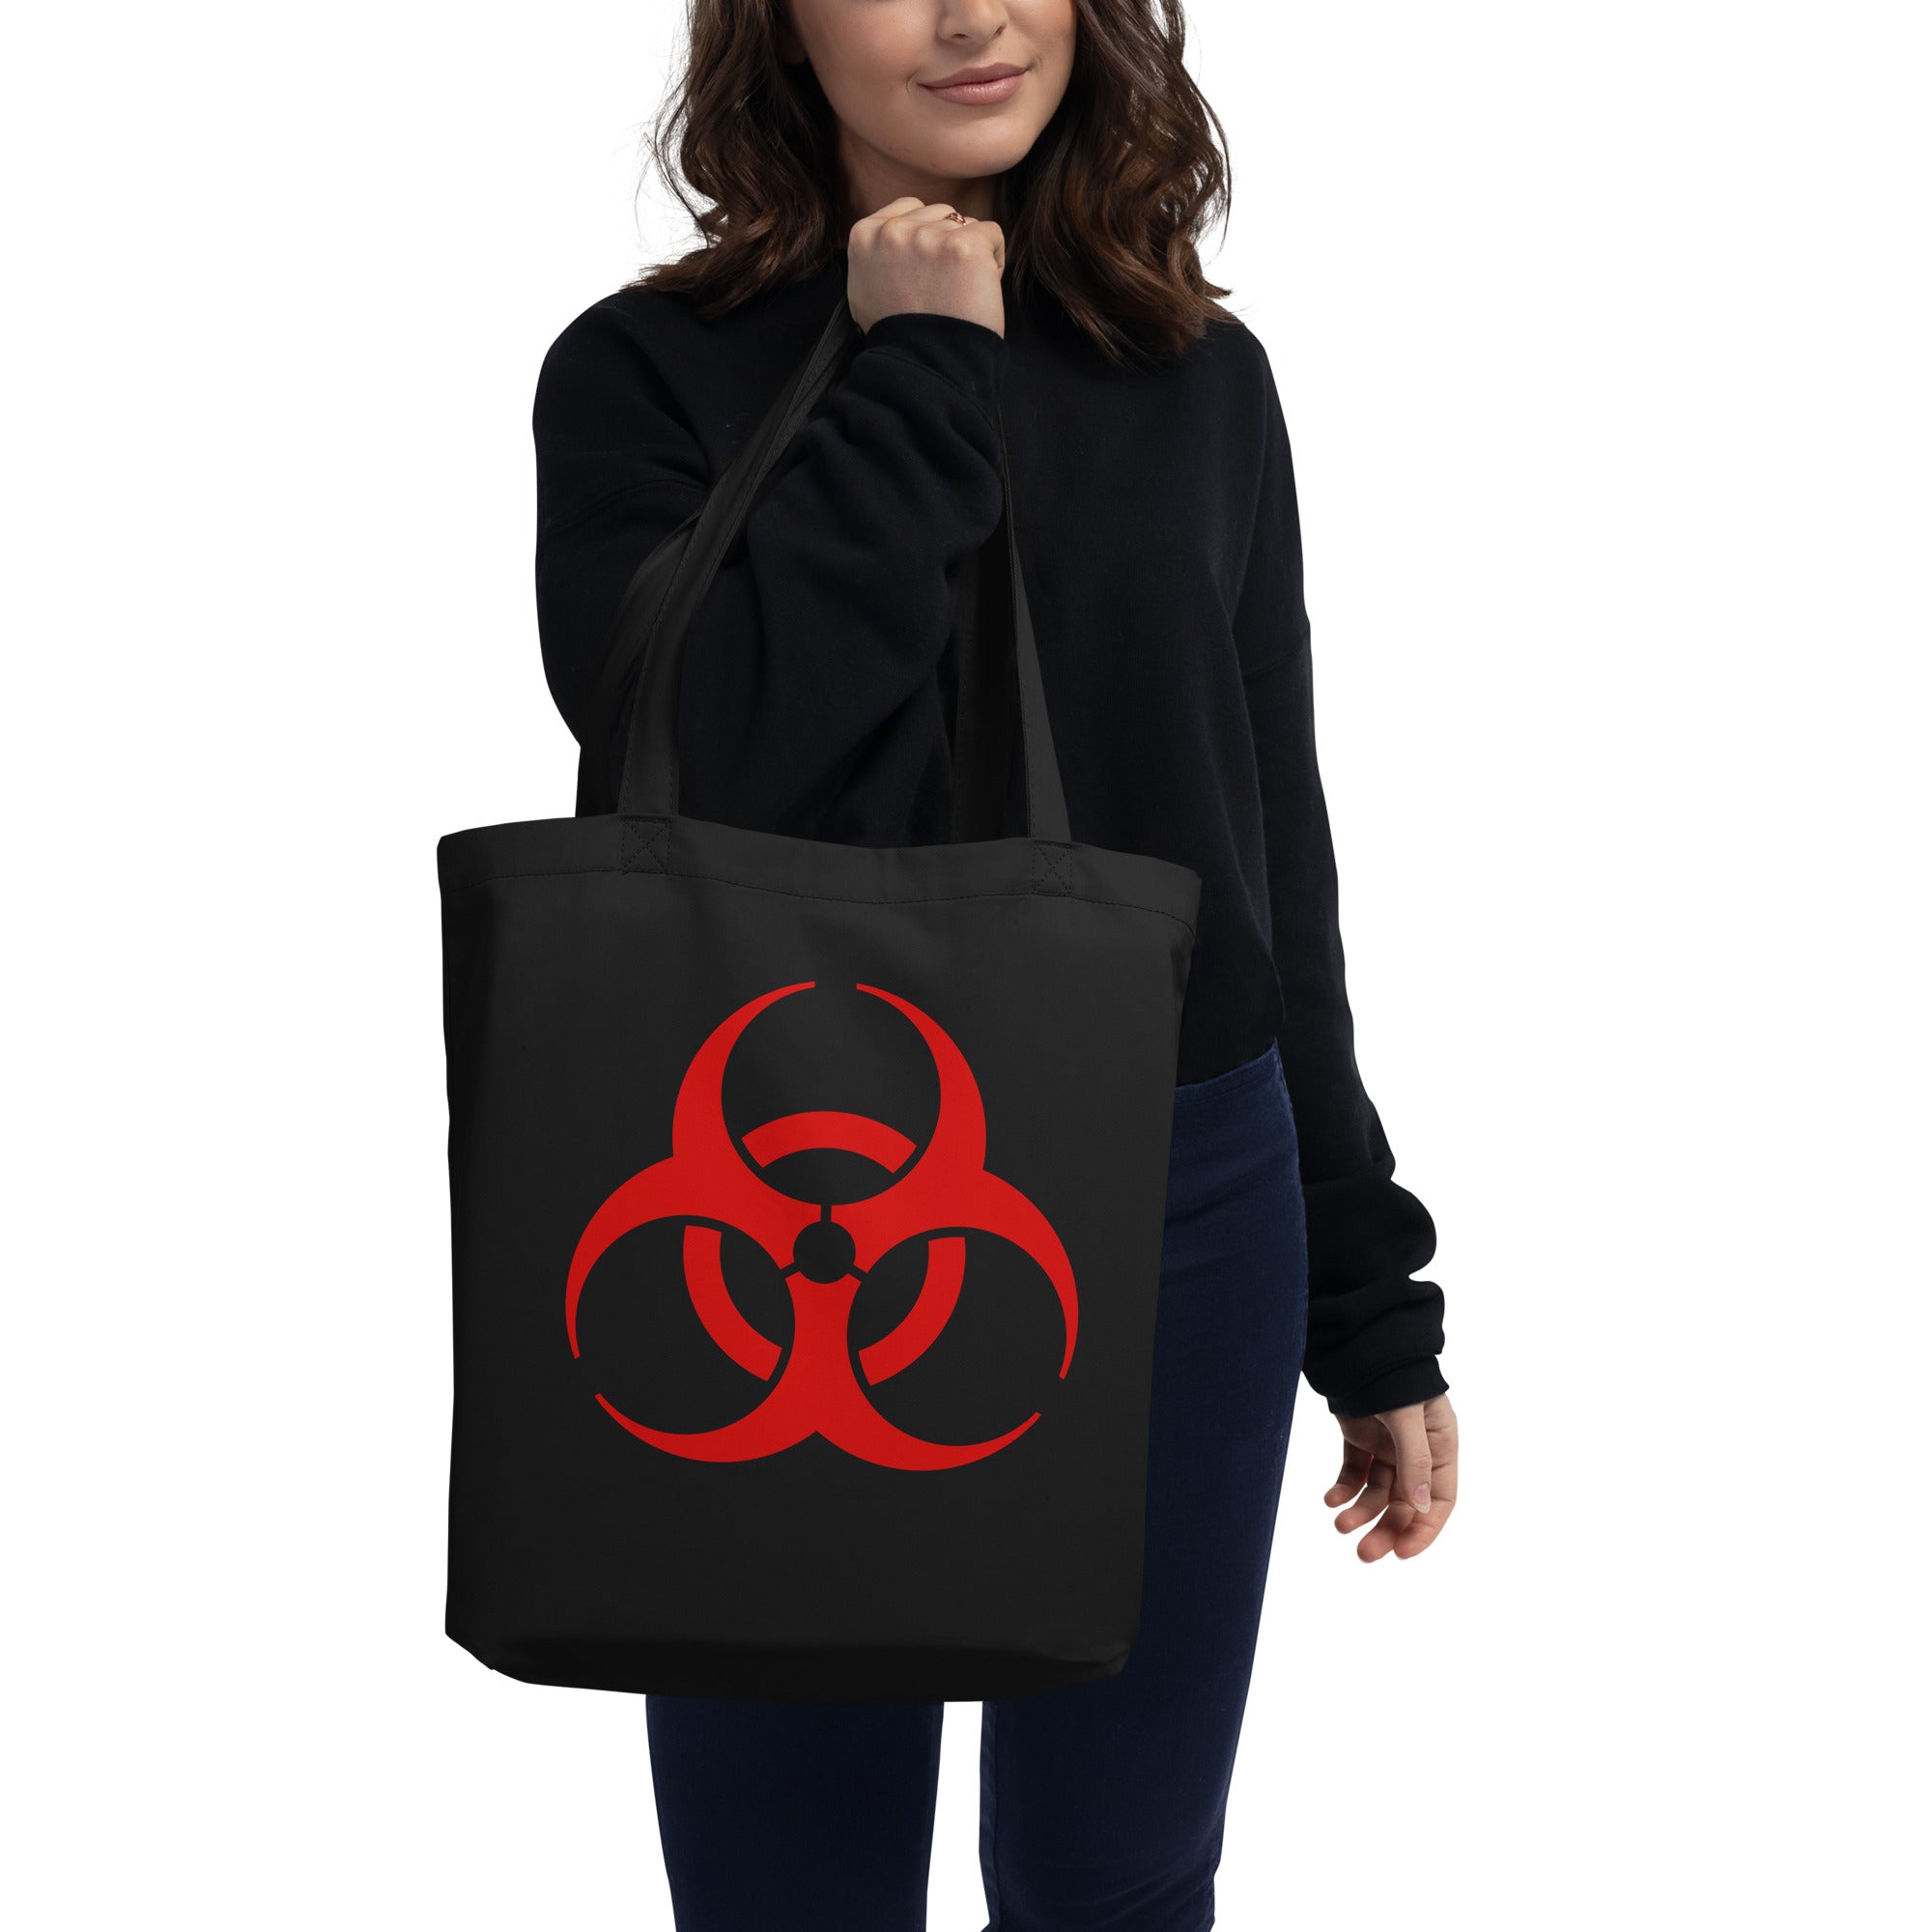 Red Bio Hazard Symbol Warning Sign Eco Tote Bag - Edge of Life Designs